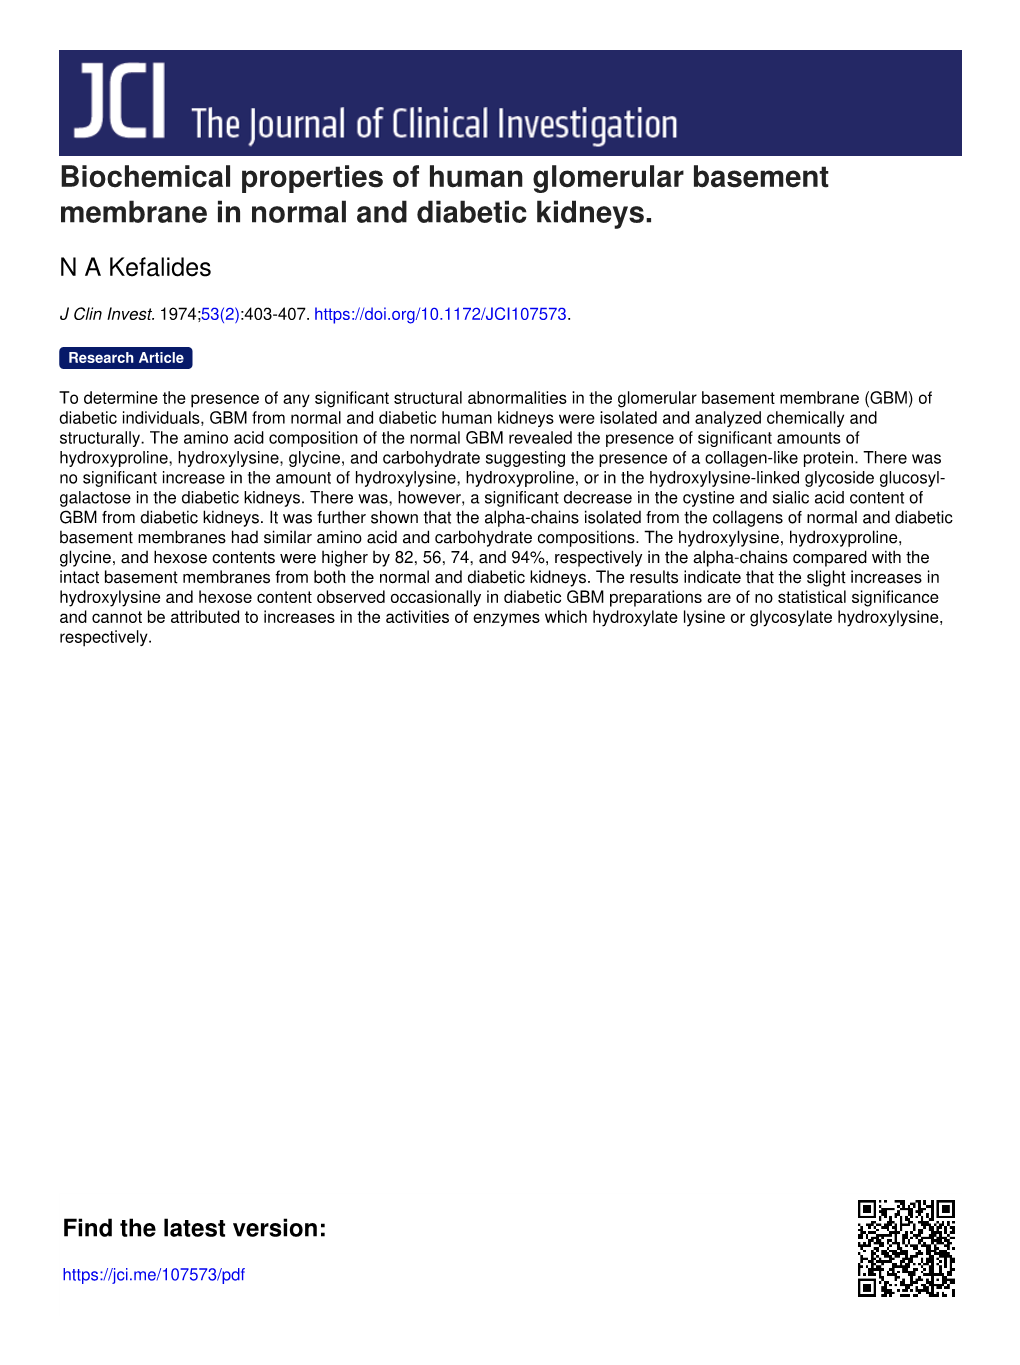 Biochemical Properties of Human Glomerular Basement Membrane in Normal and Diabetic Kidneys